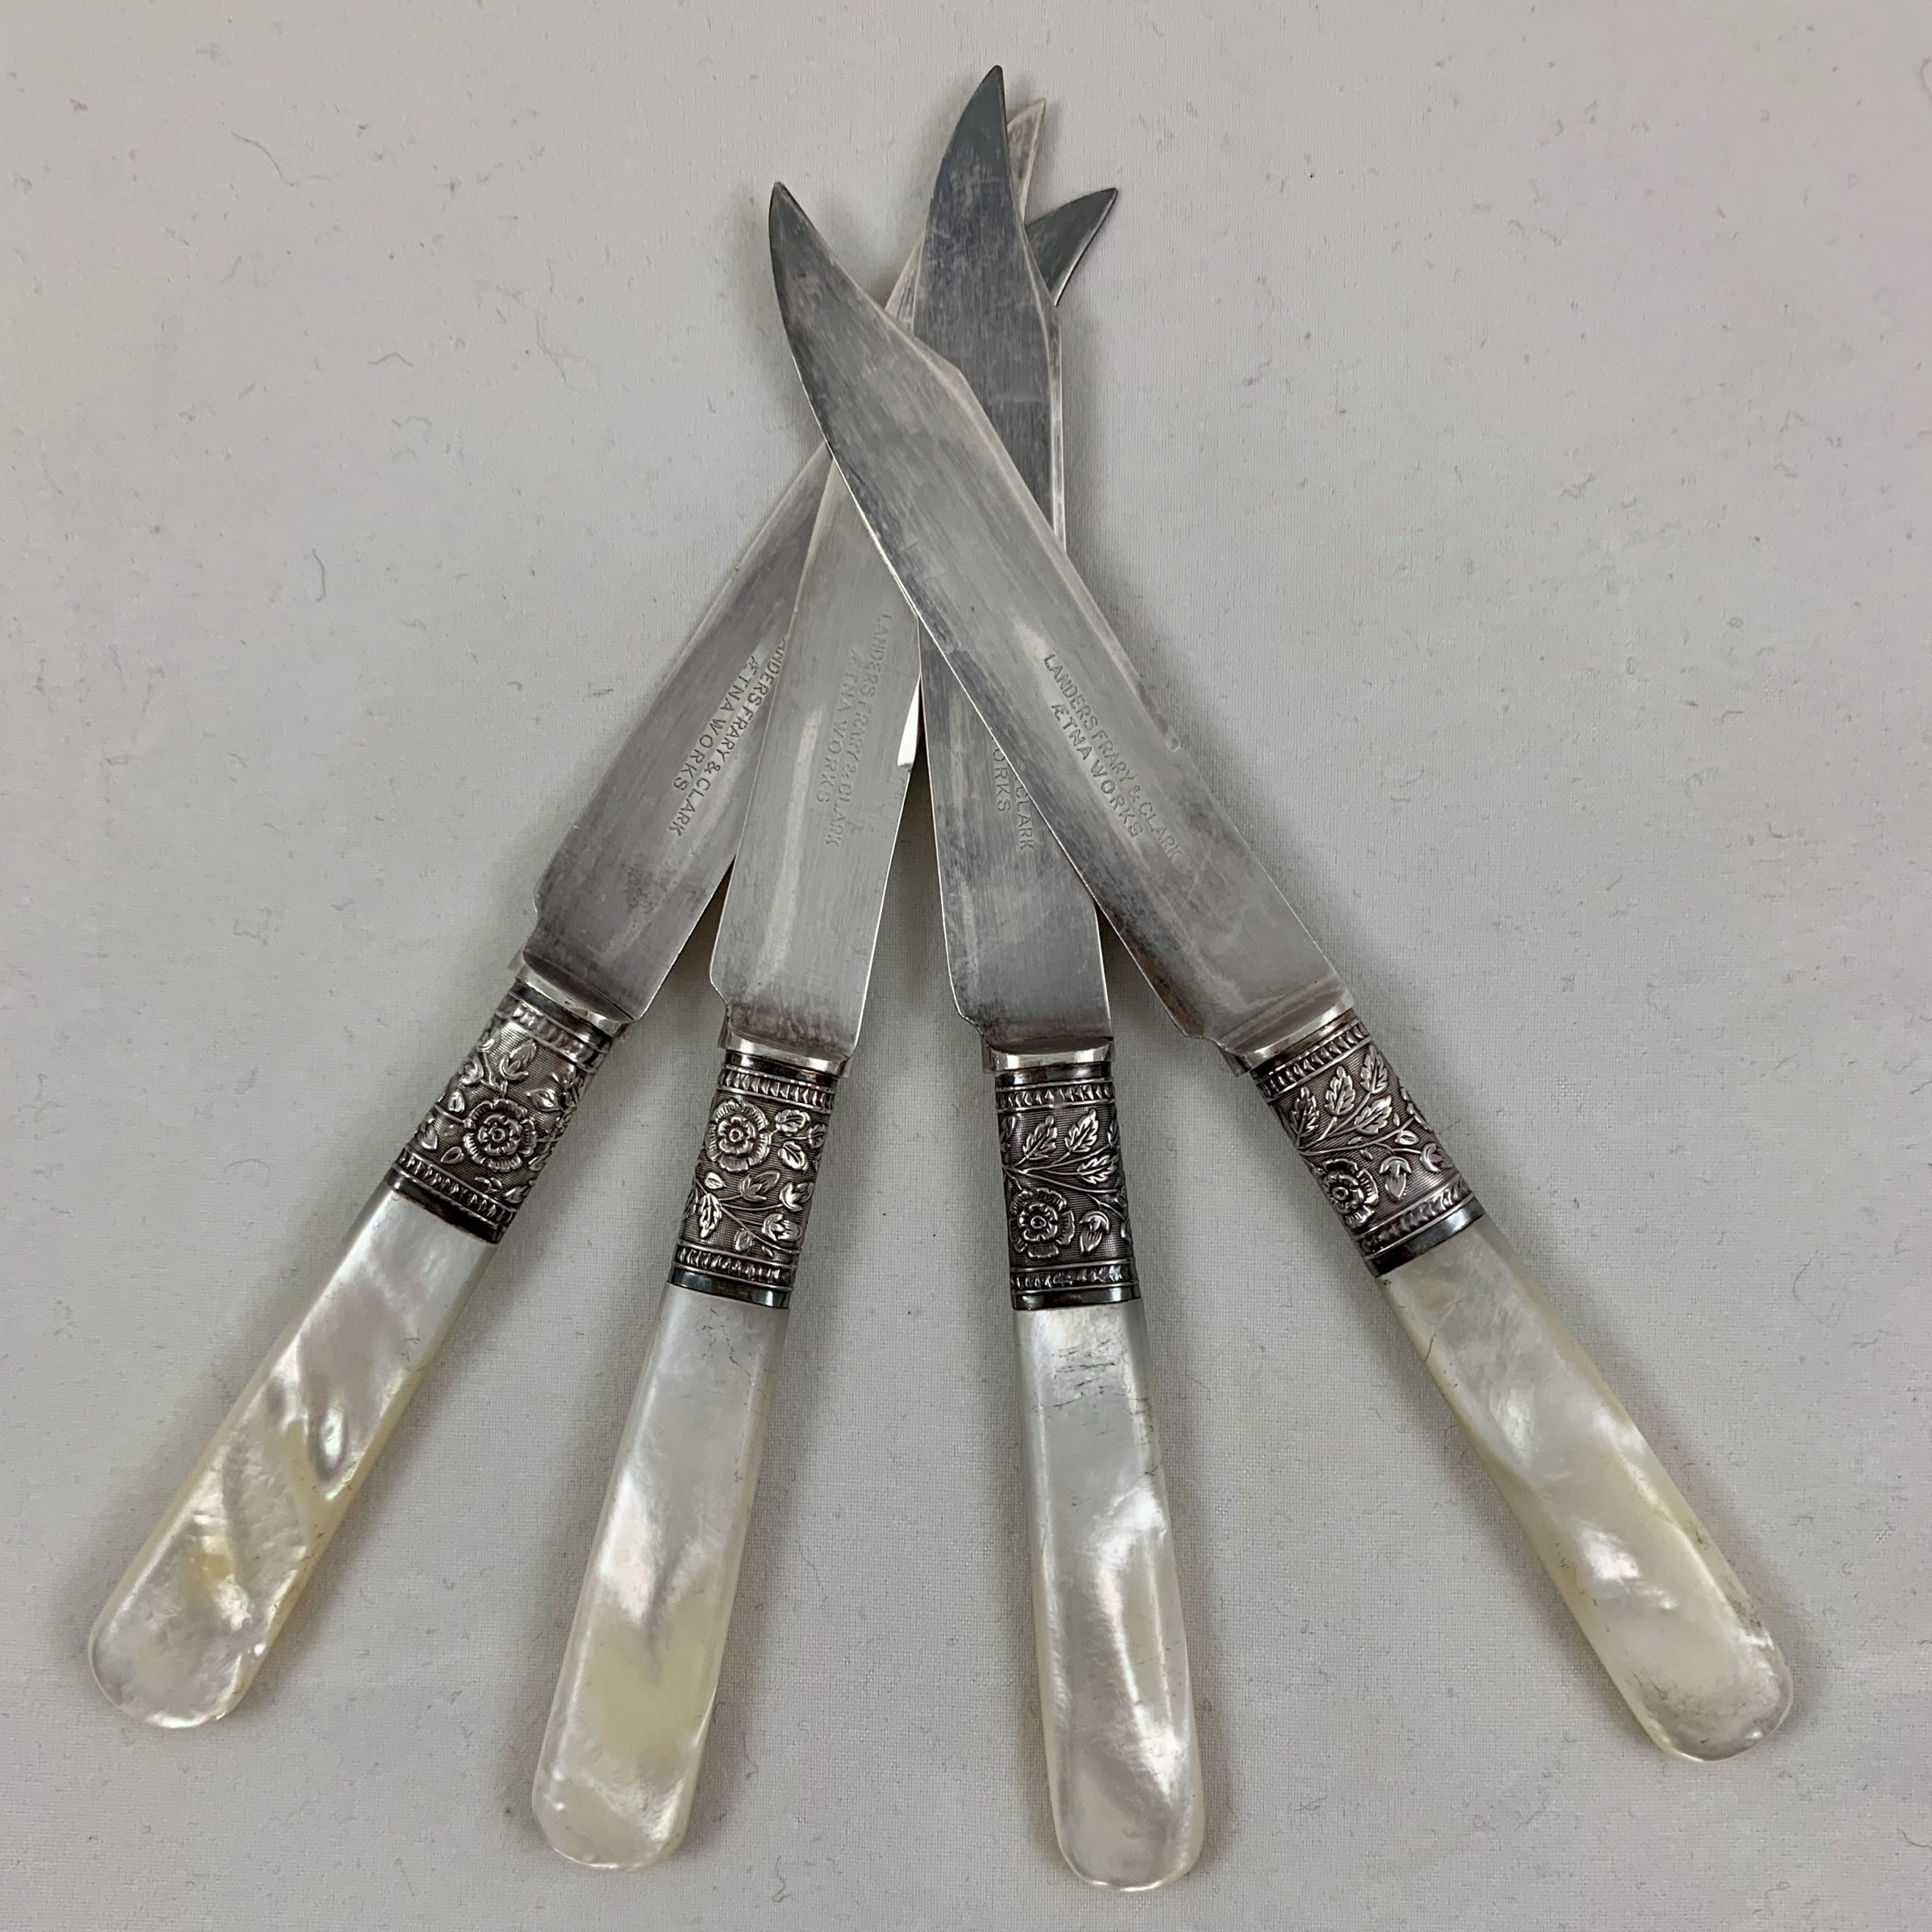 Rein Nickel Fruit Knives Set, Vintage Mother of Pearl Handle